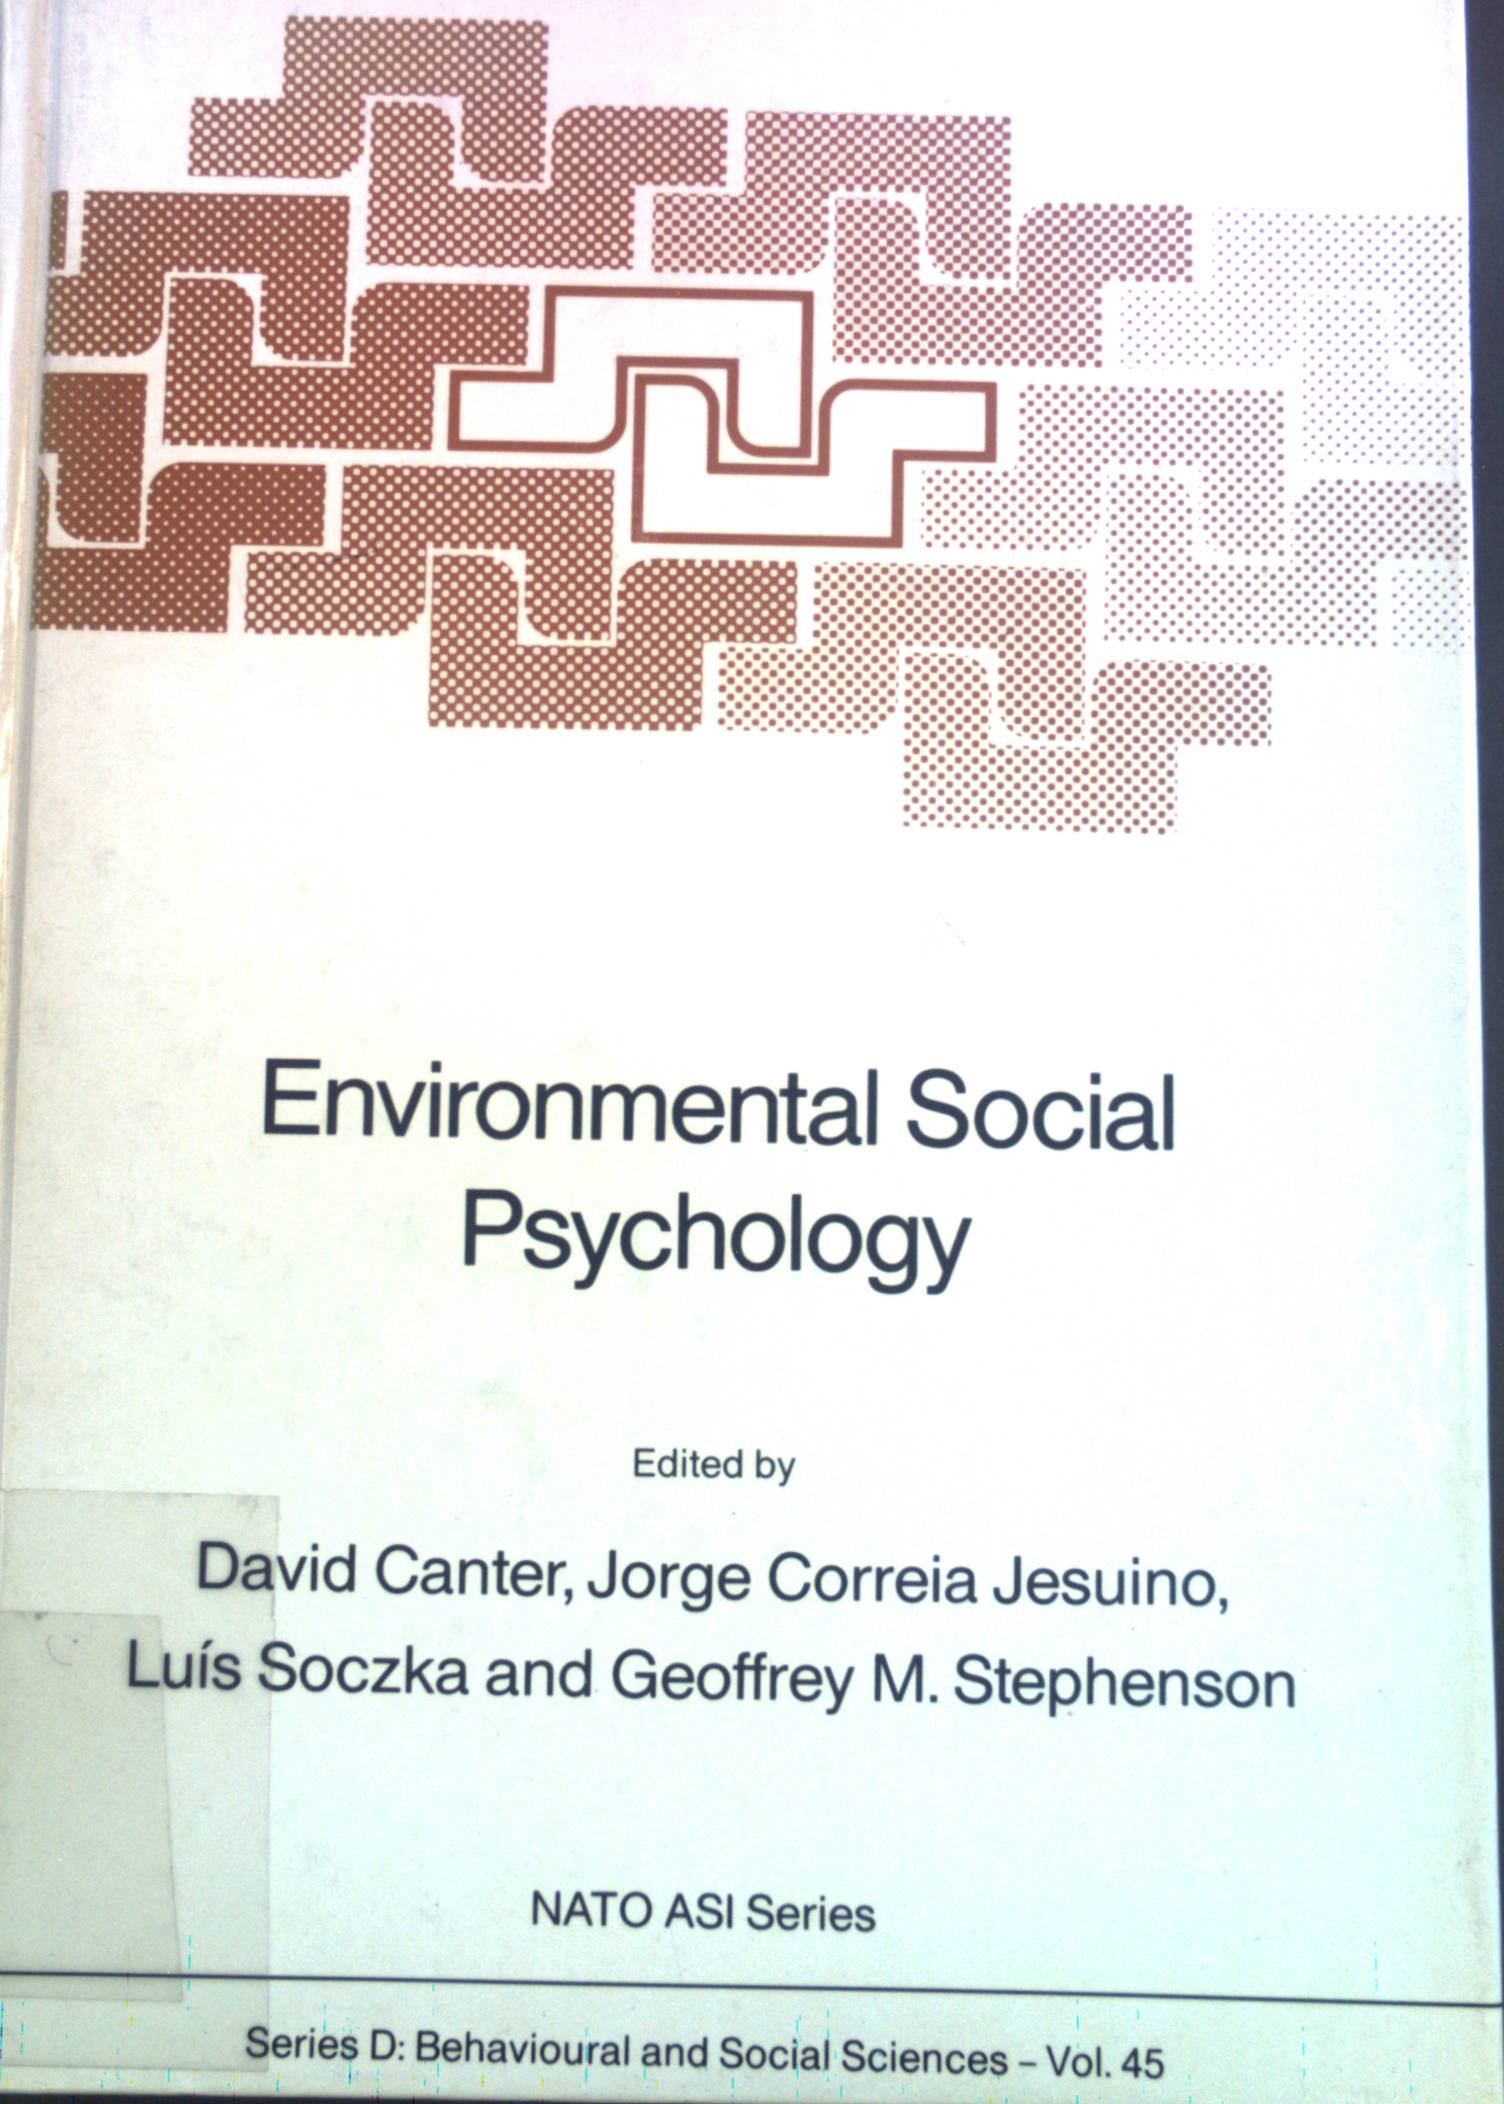 Environmental Social Psychology. NATO ASI Series, Series D: Behavioural and Social Sciences, Vol. 45. - Canter, David, Jorge Correia Jesuino Luis Soczka a. o.